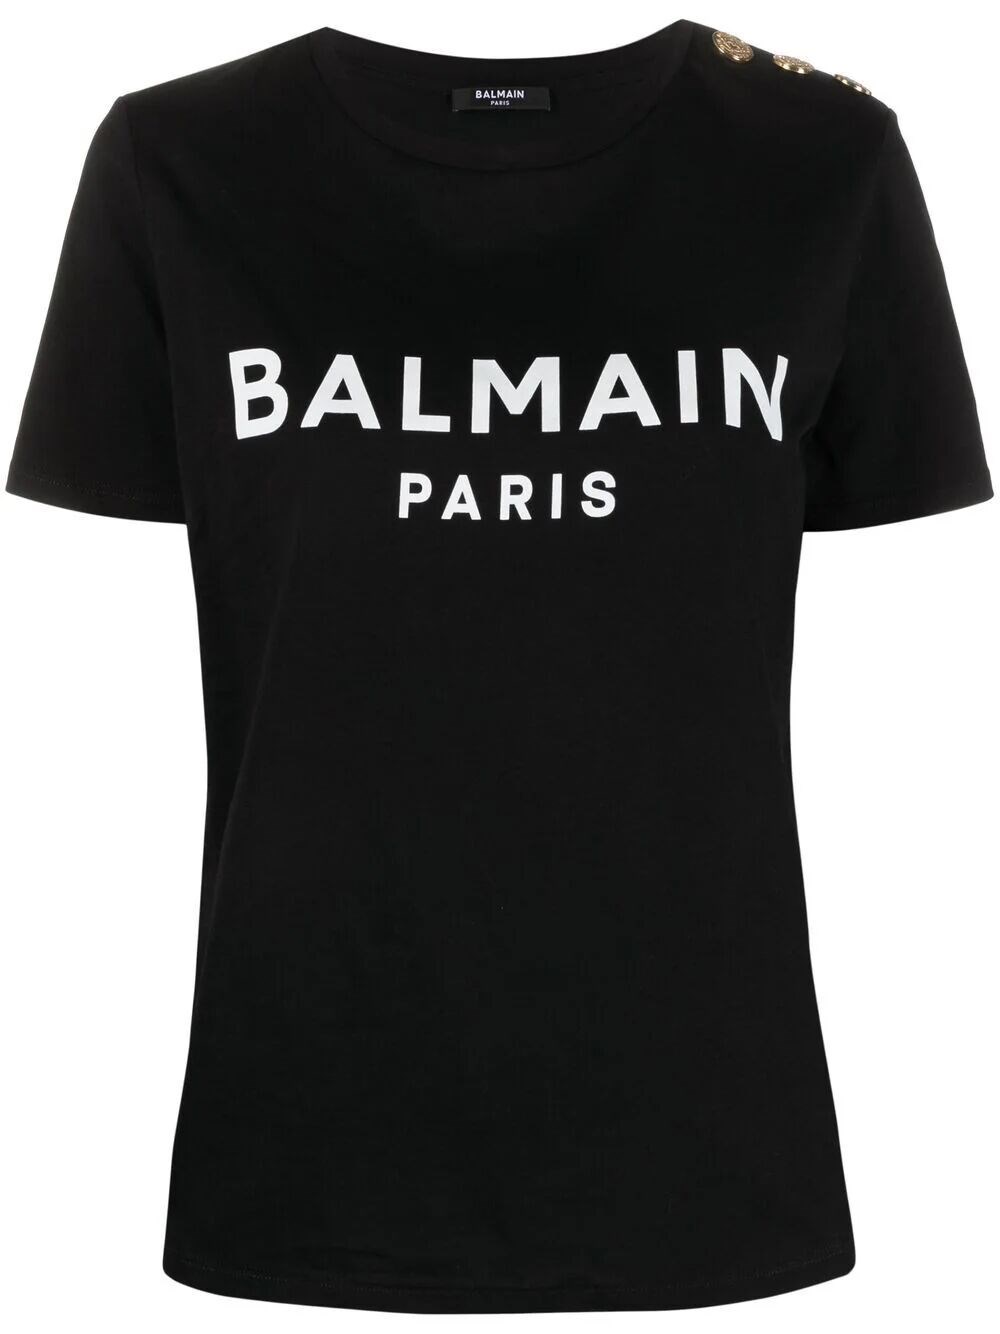 Balmain T-shirt With  Paris Print In Black